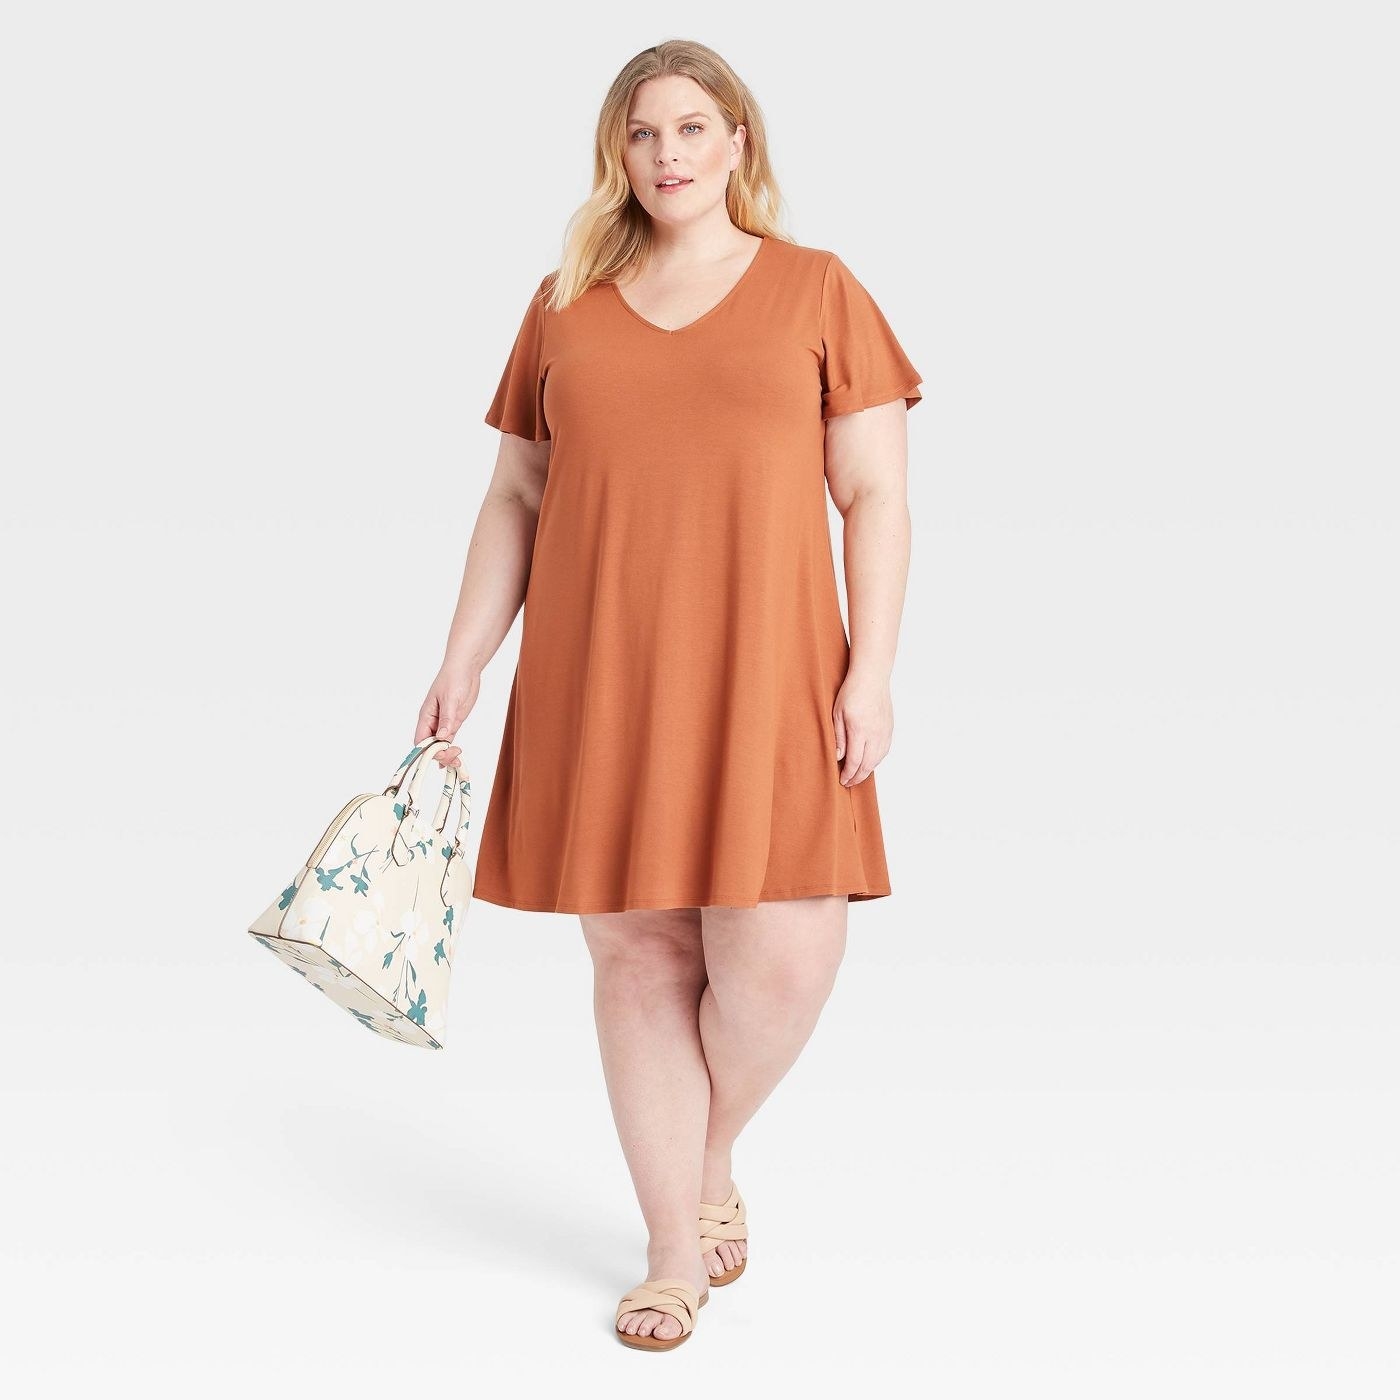 A model wearing an orange knit dress with a flutter sleeve